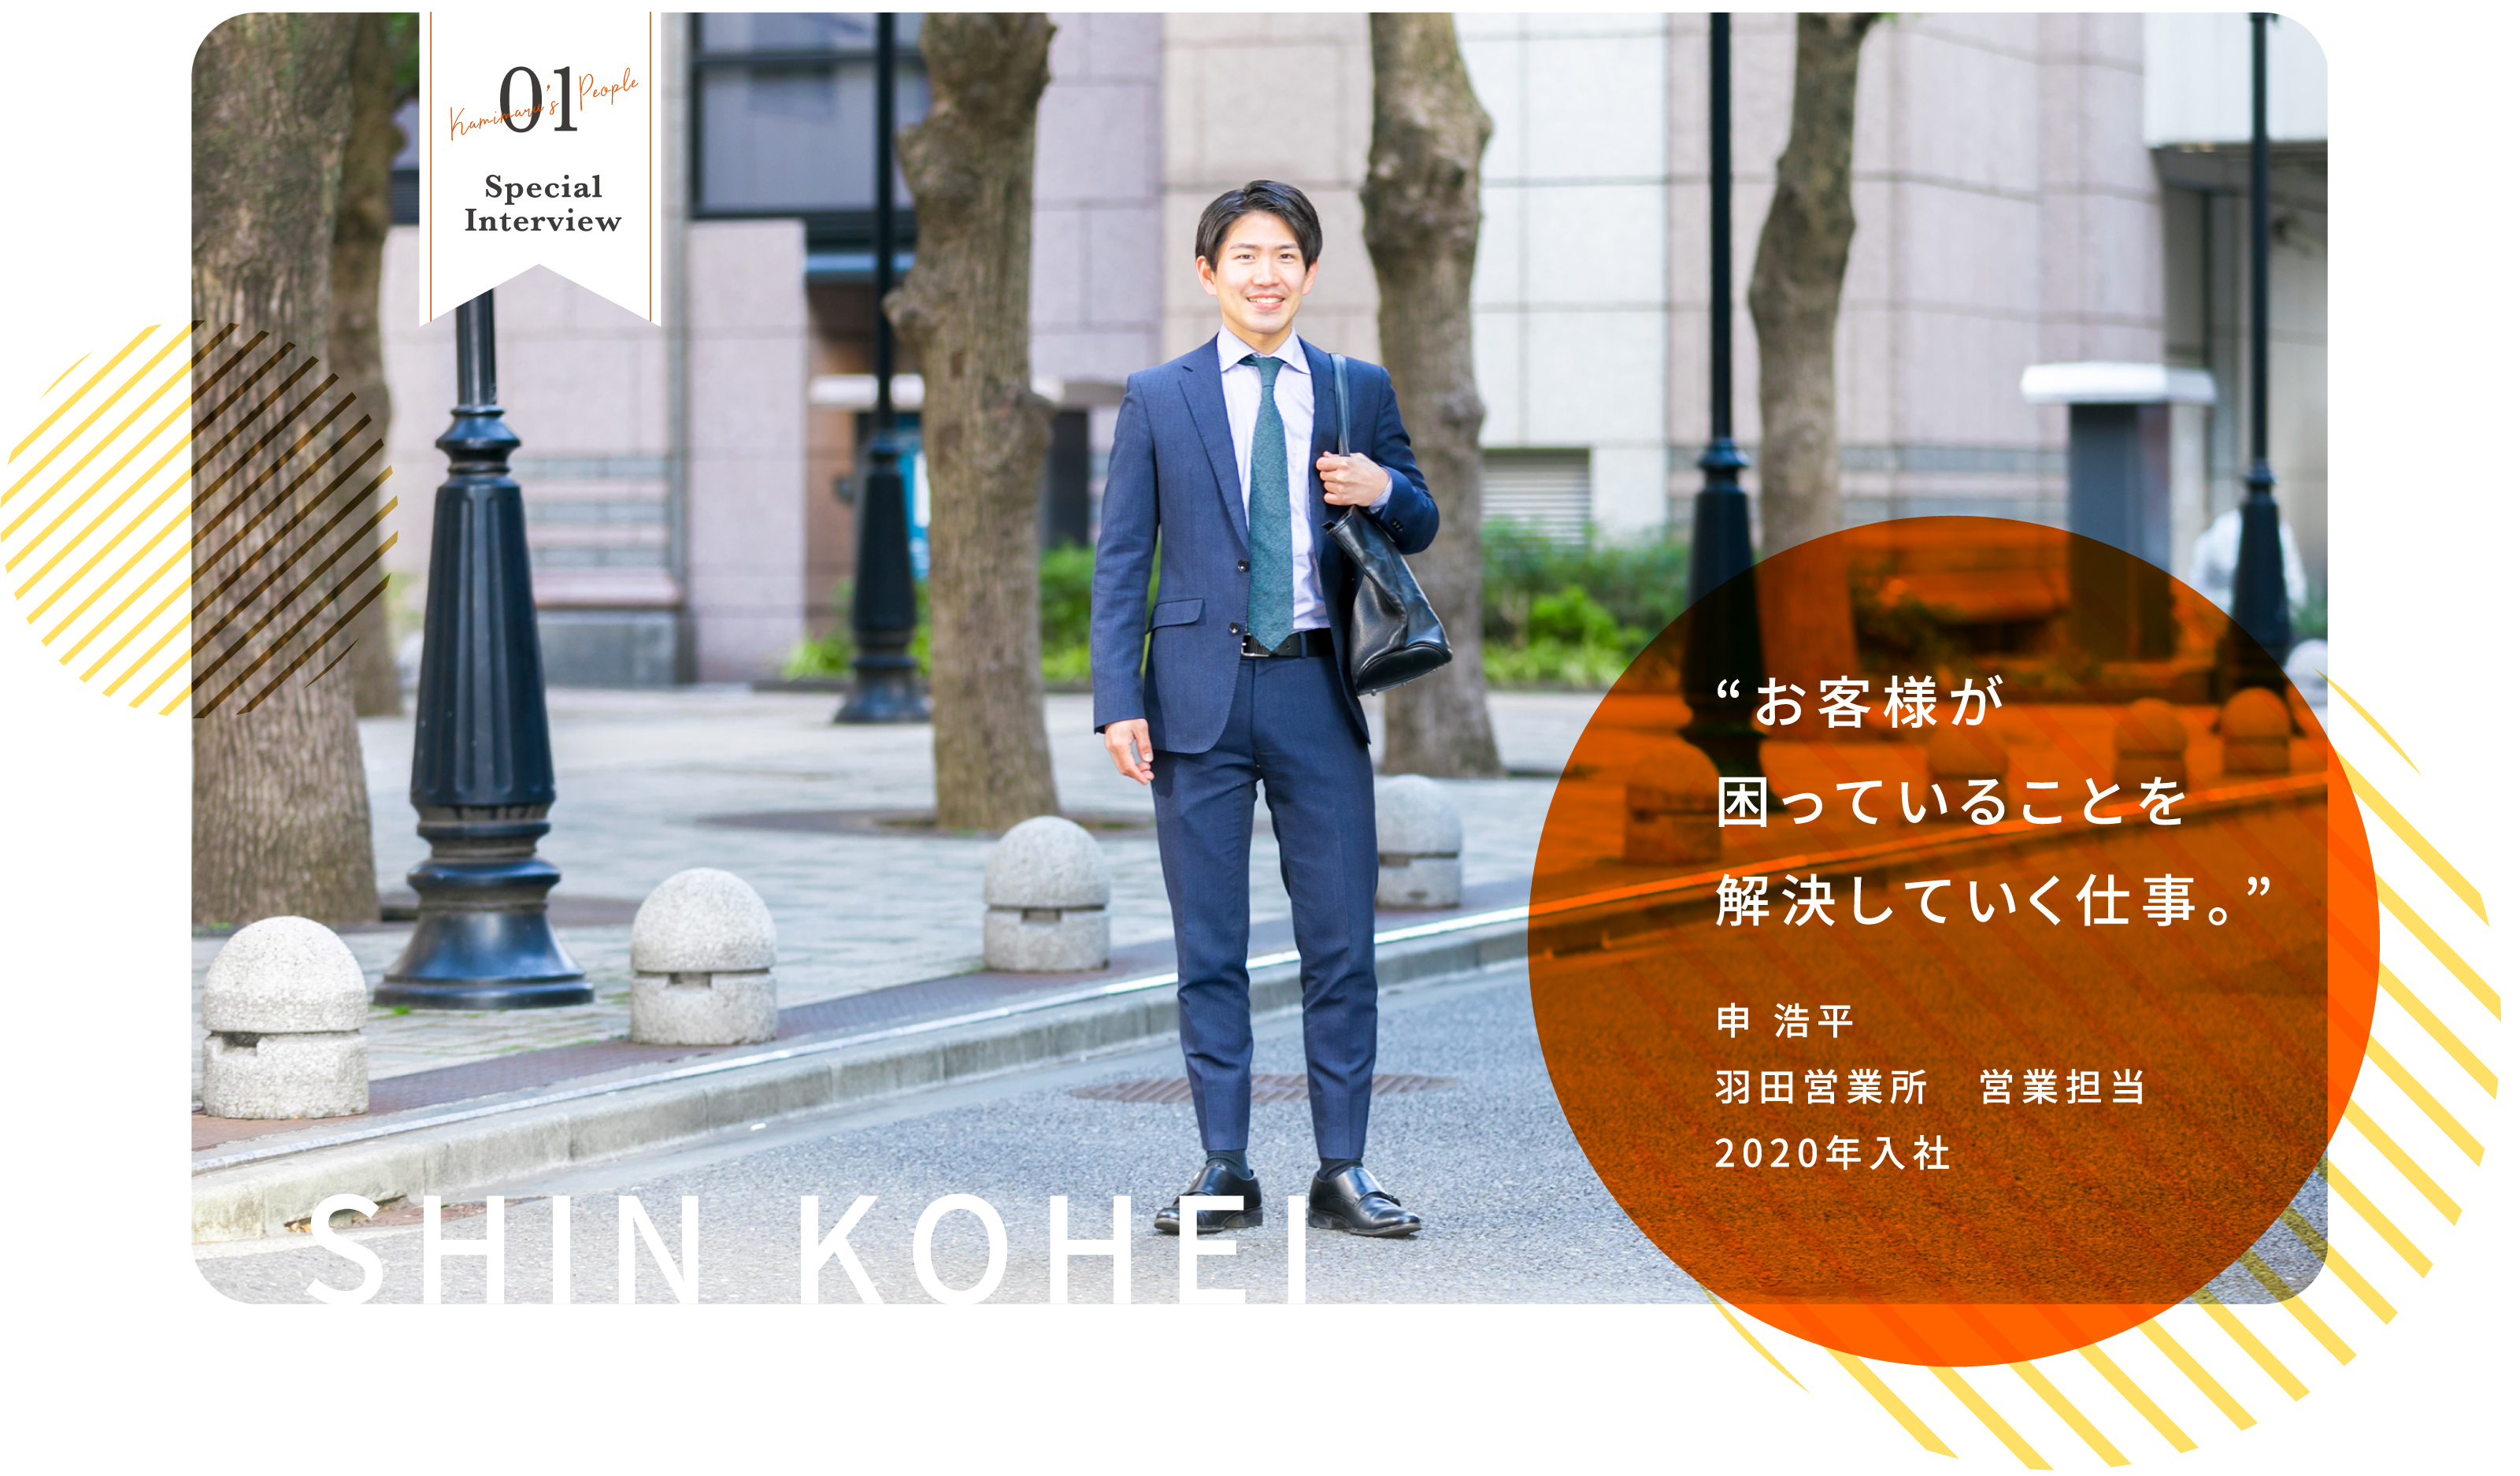 01 Kamimaru's People Special Interview SHIN KOHEI “お客様が困っていることを解決していく仕事。” 申 浩平 羽田営業所　営業担当 2020年入社